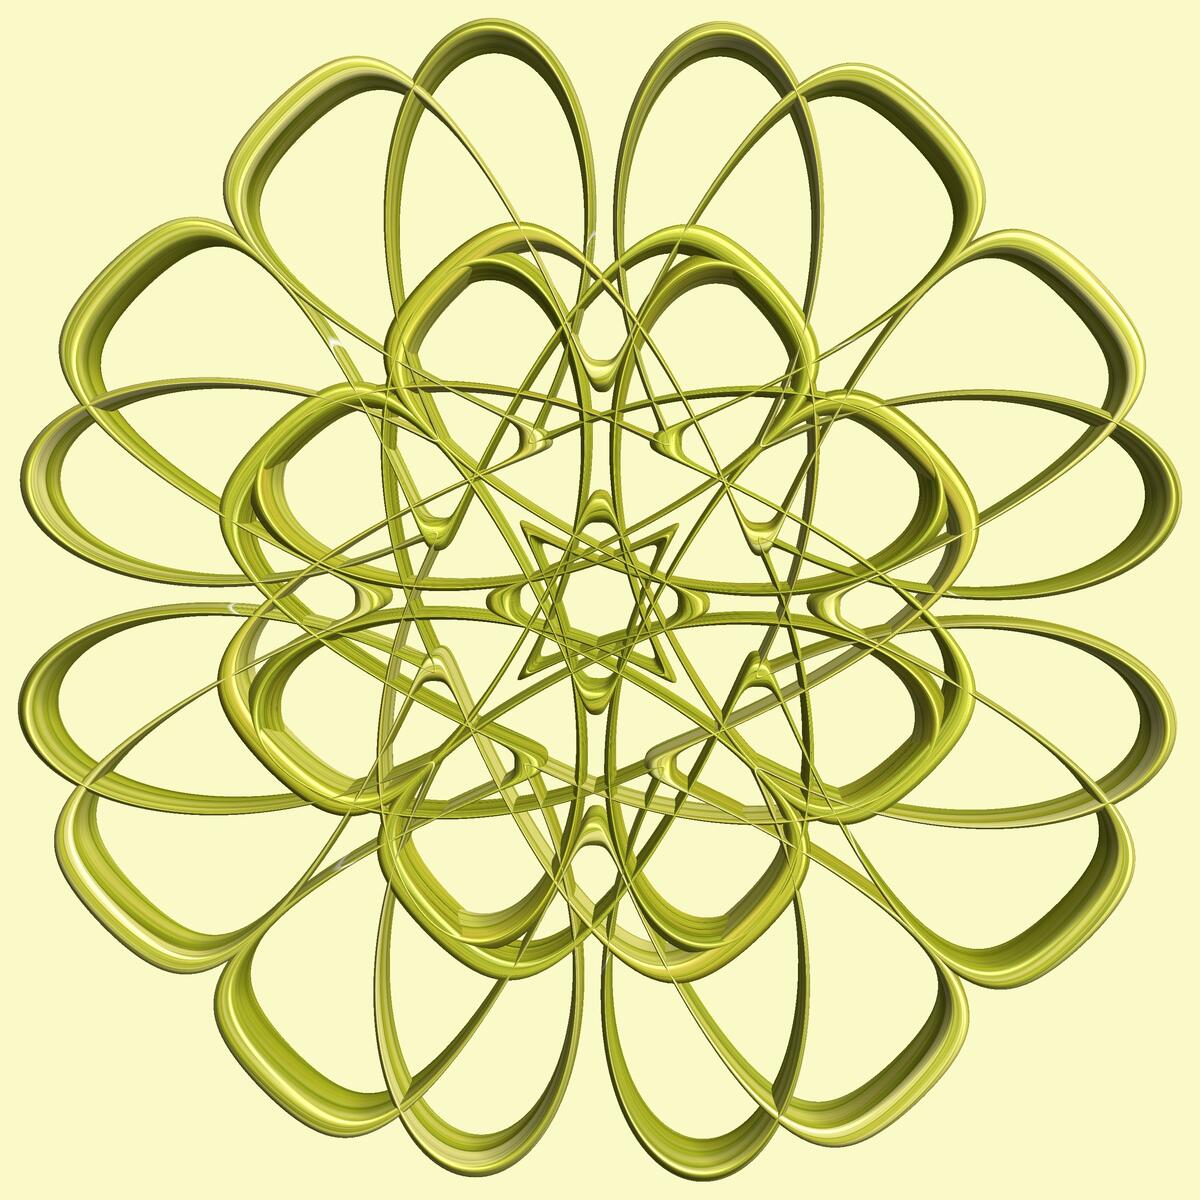 A pattern resembling a flower